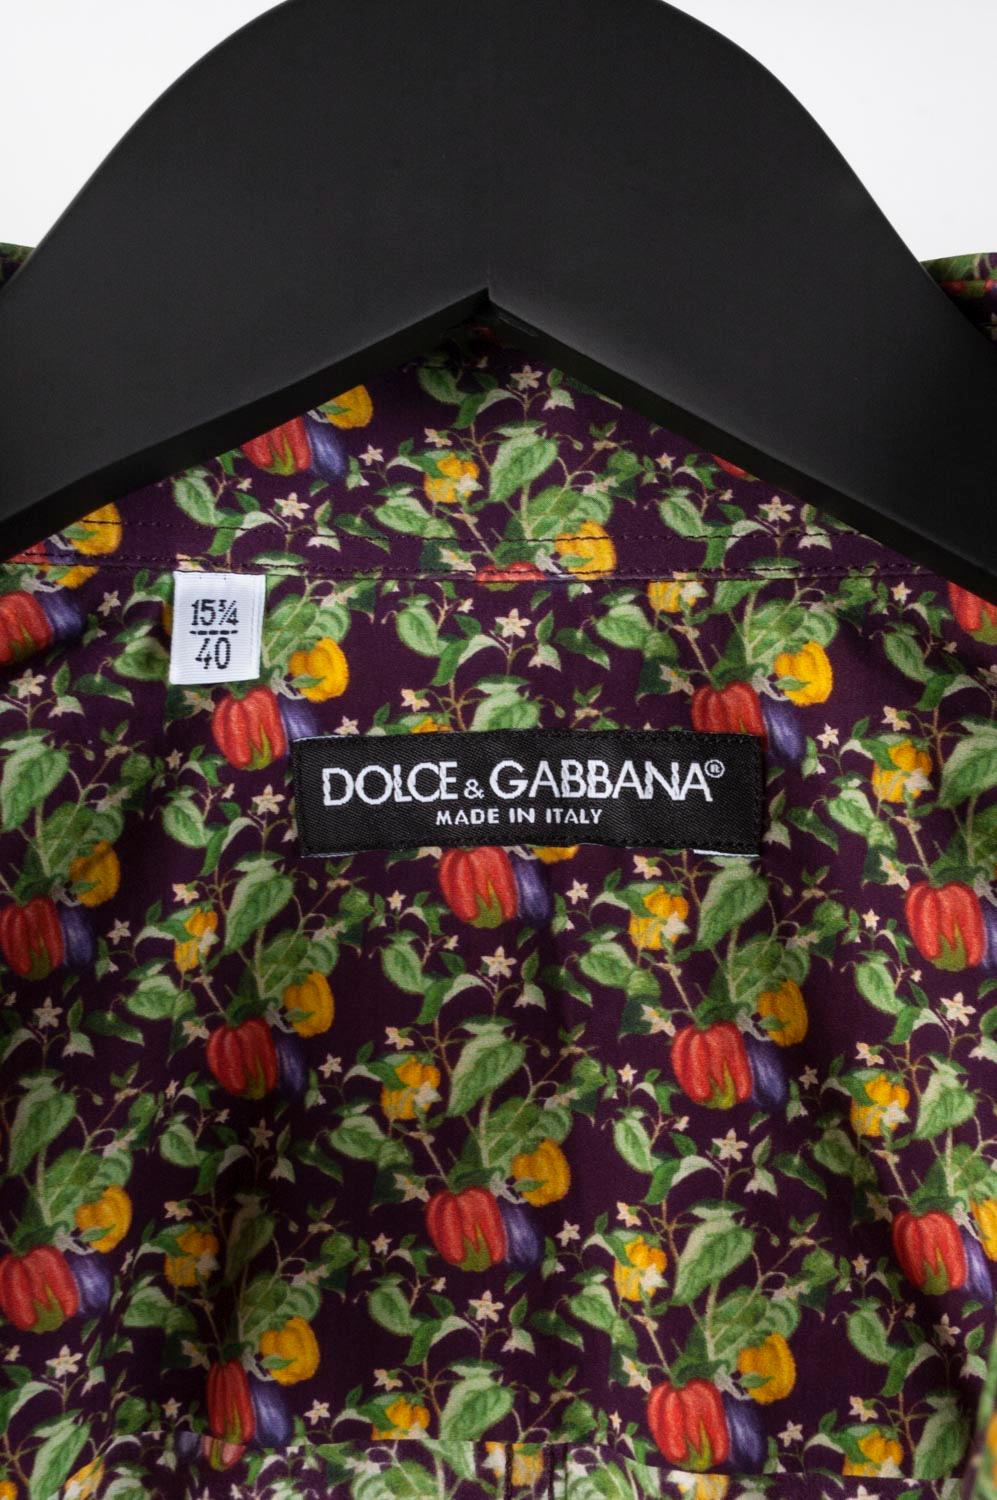 Dolce&Gabbana Men Shirt Casual Size 40/15.75 (S/M), S437 For Sale 2